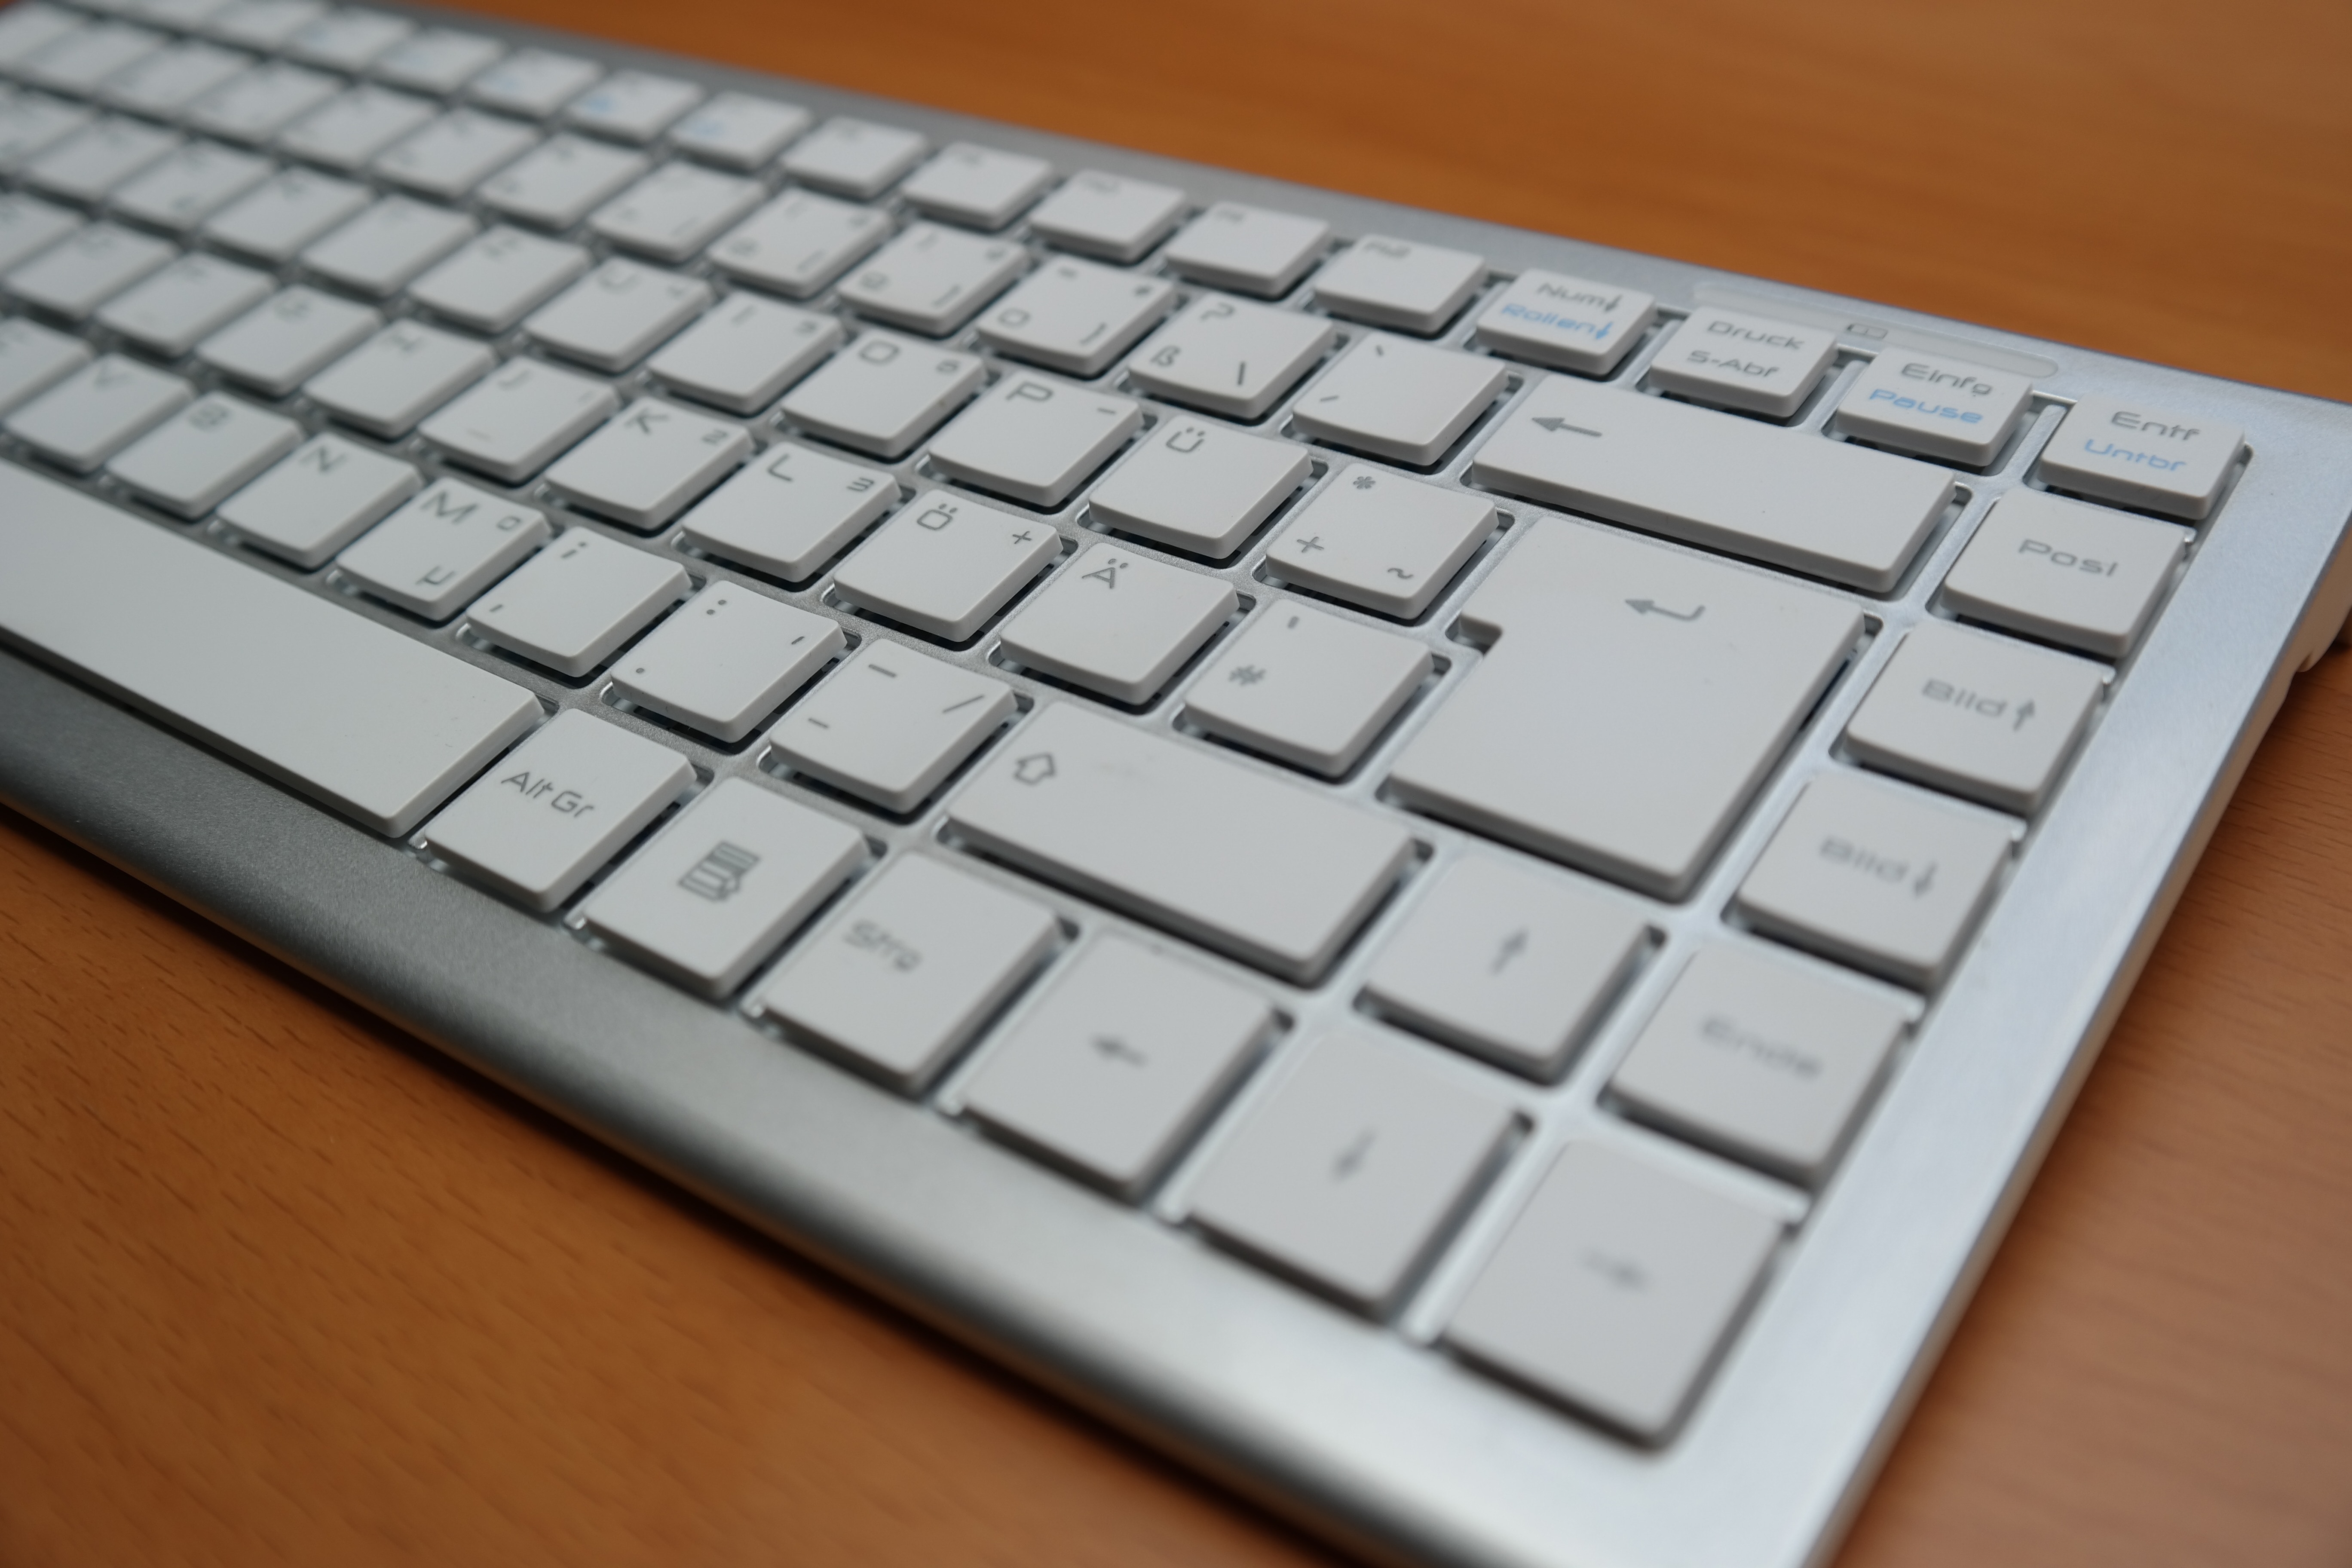 tenkeyless keyboard on brown wooden surface